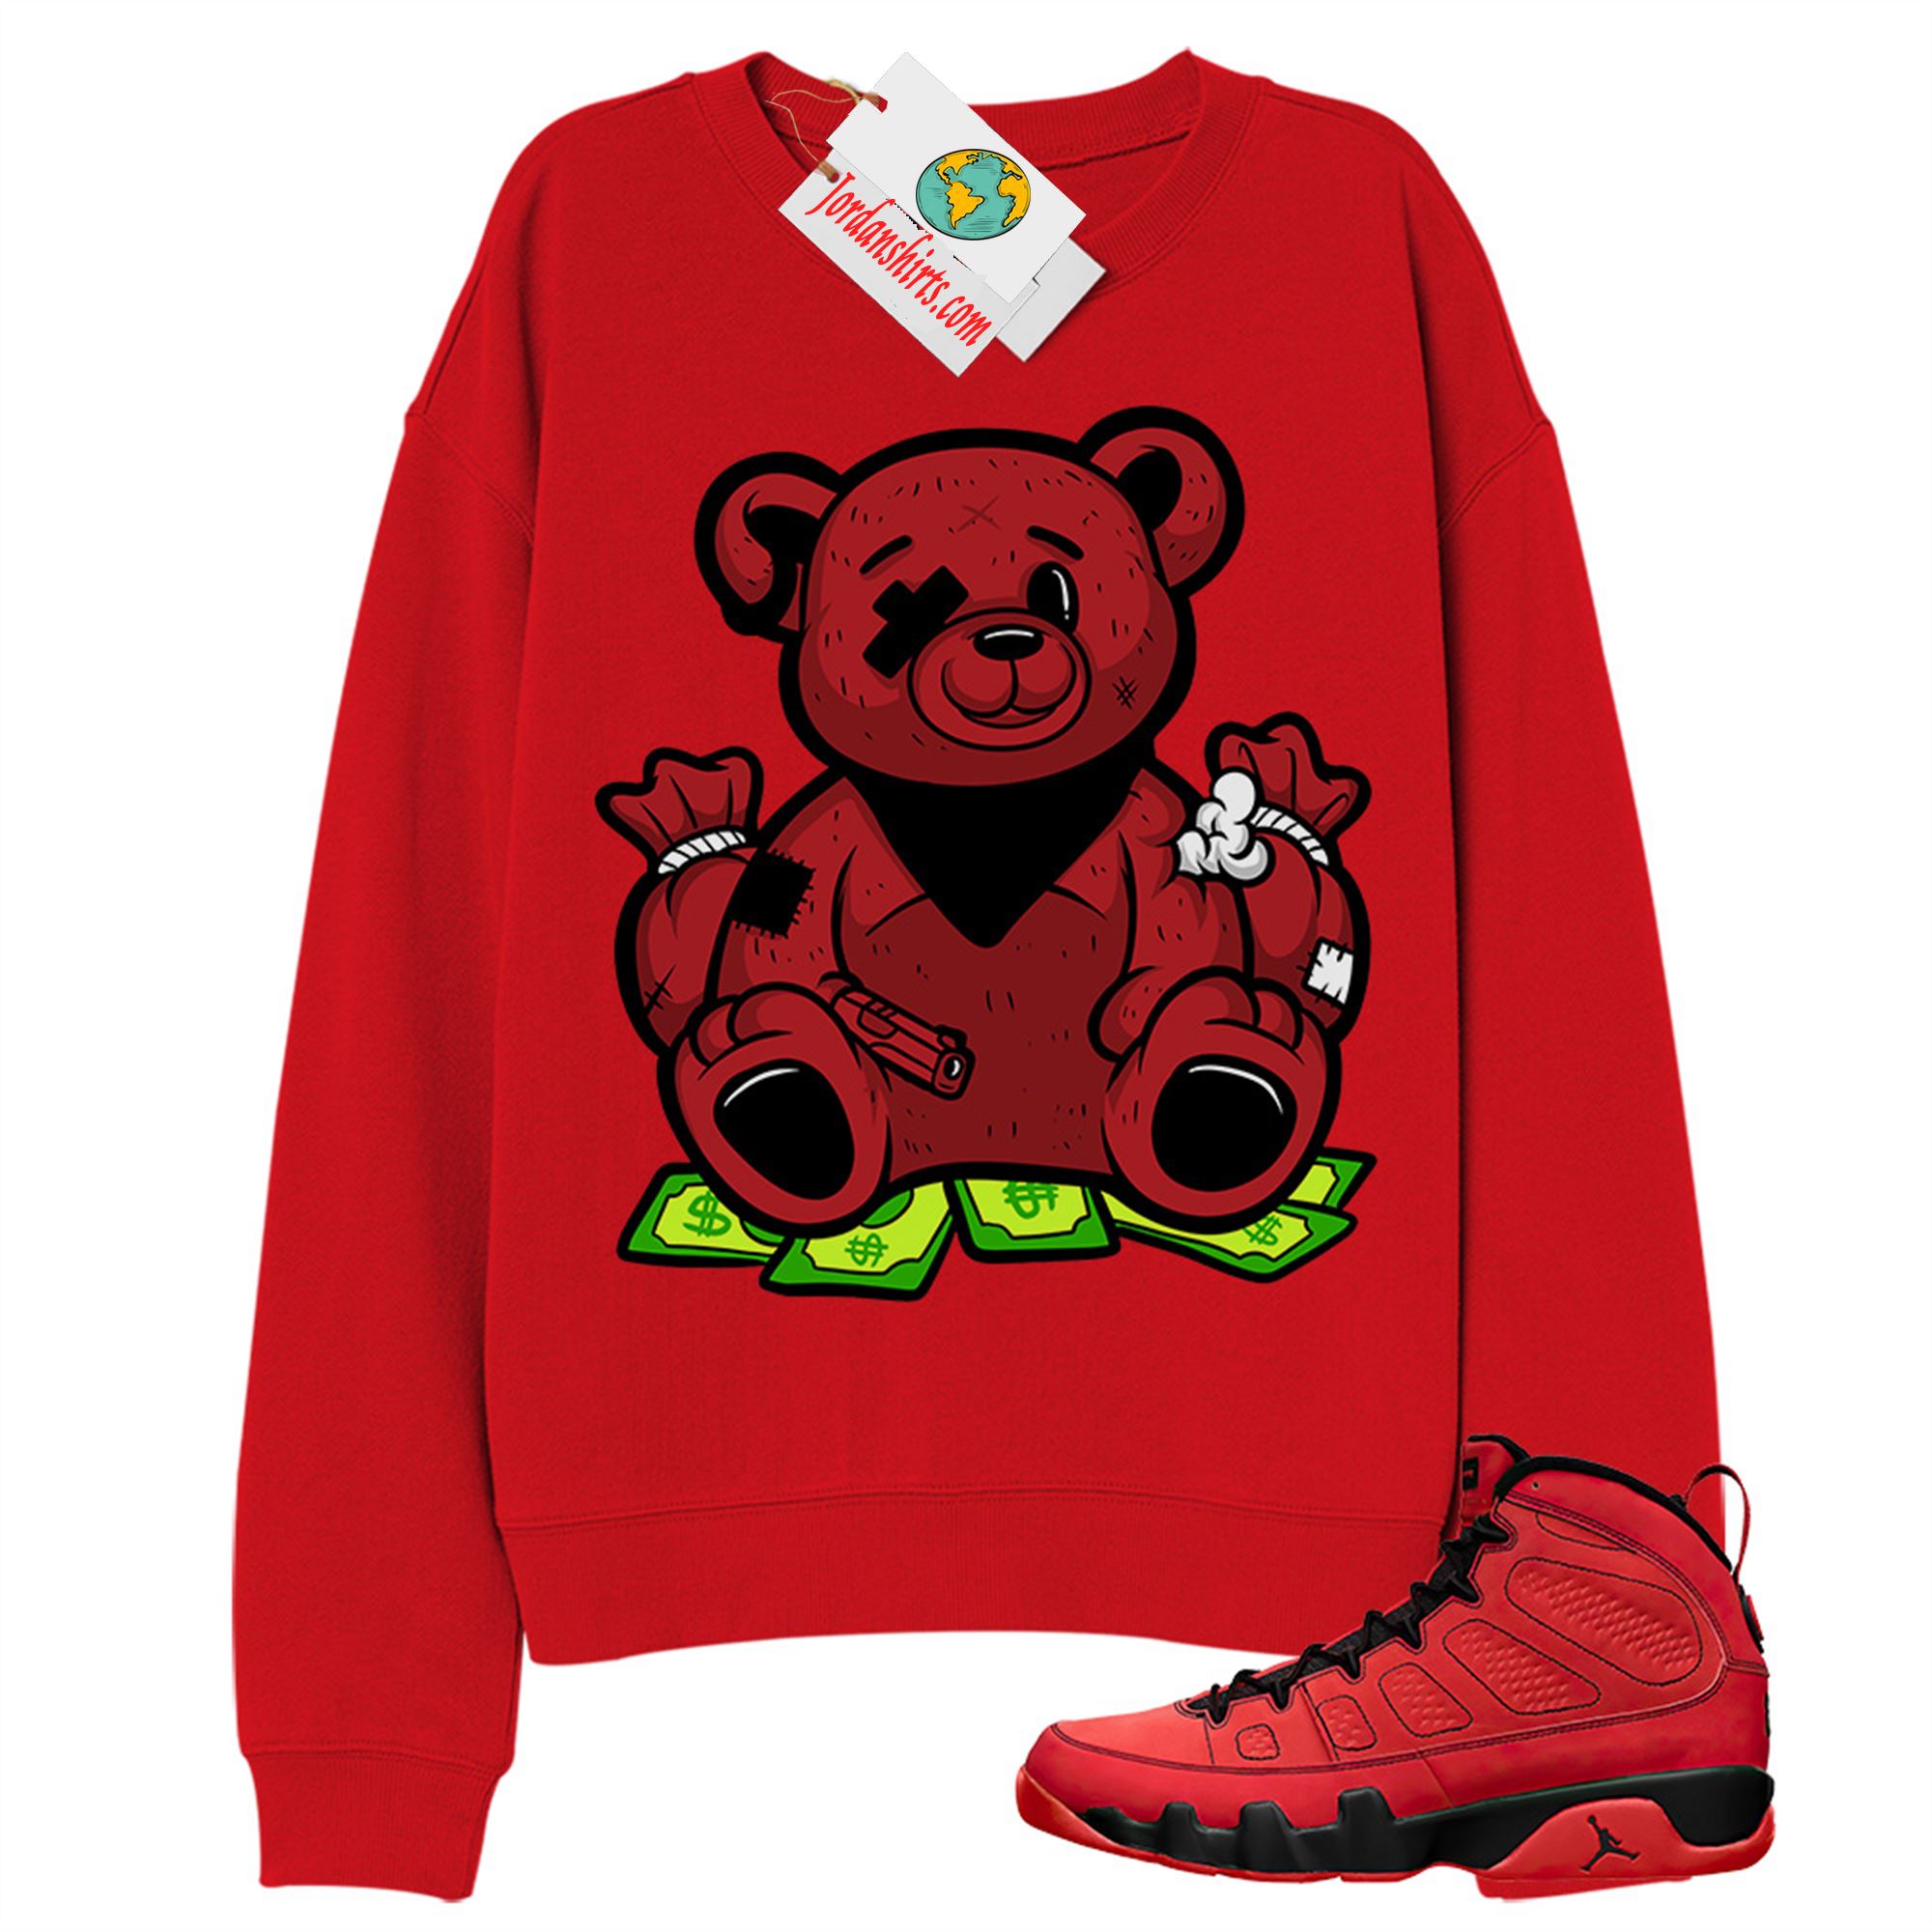 Jordan 9 Sweatshirt, Rich Teddy Bear Gangster Red Sweatshirt Air Jordan 9 Chile Red 9s Plus Size Up To 5xl